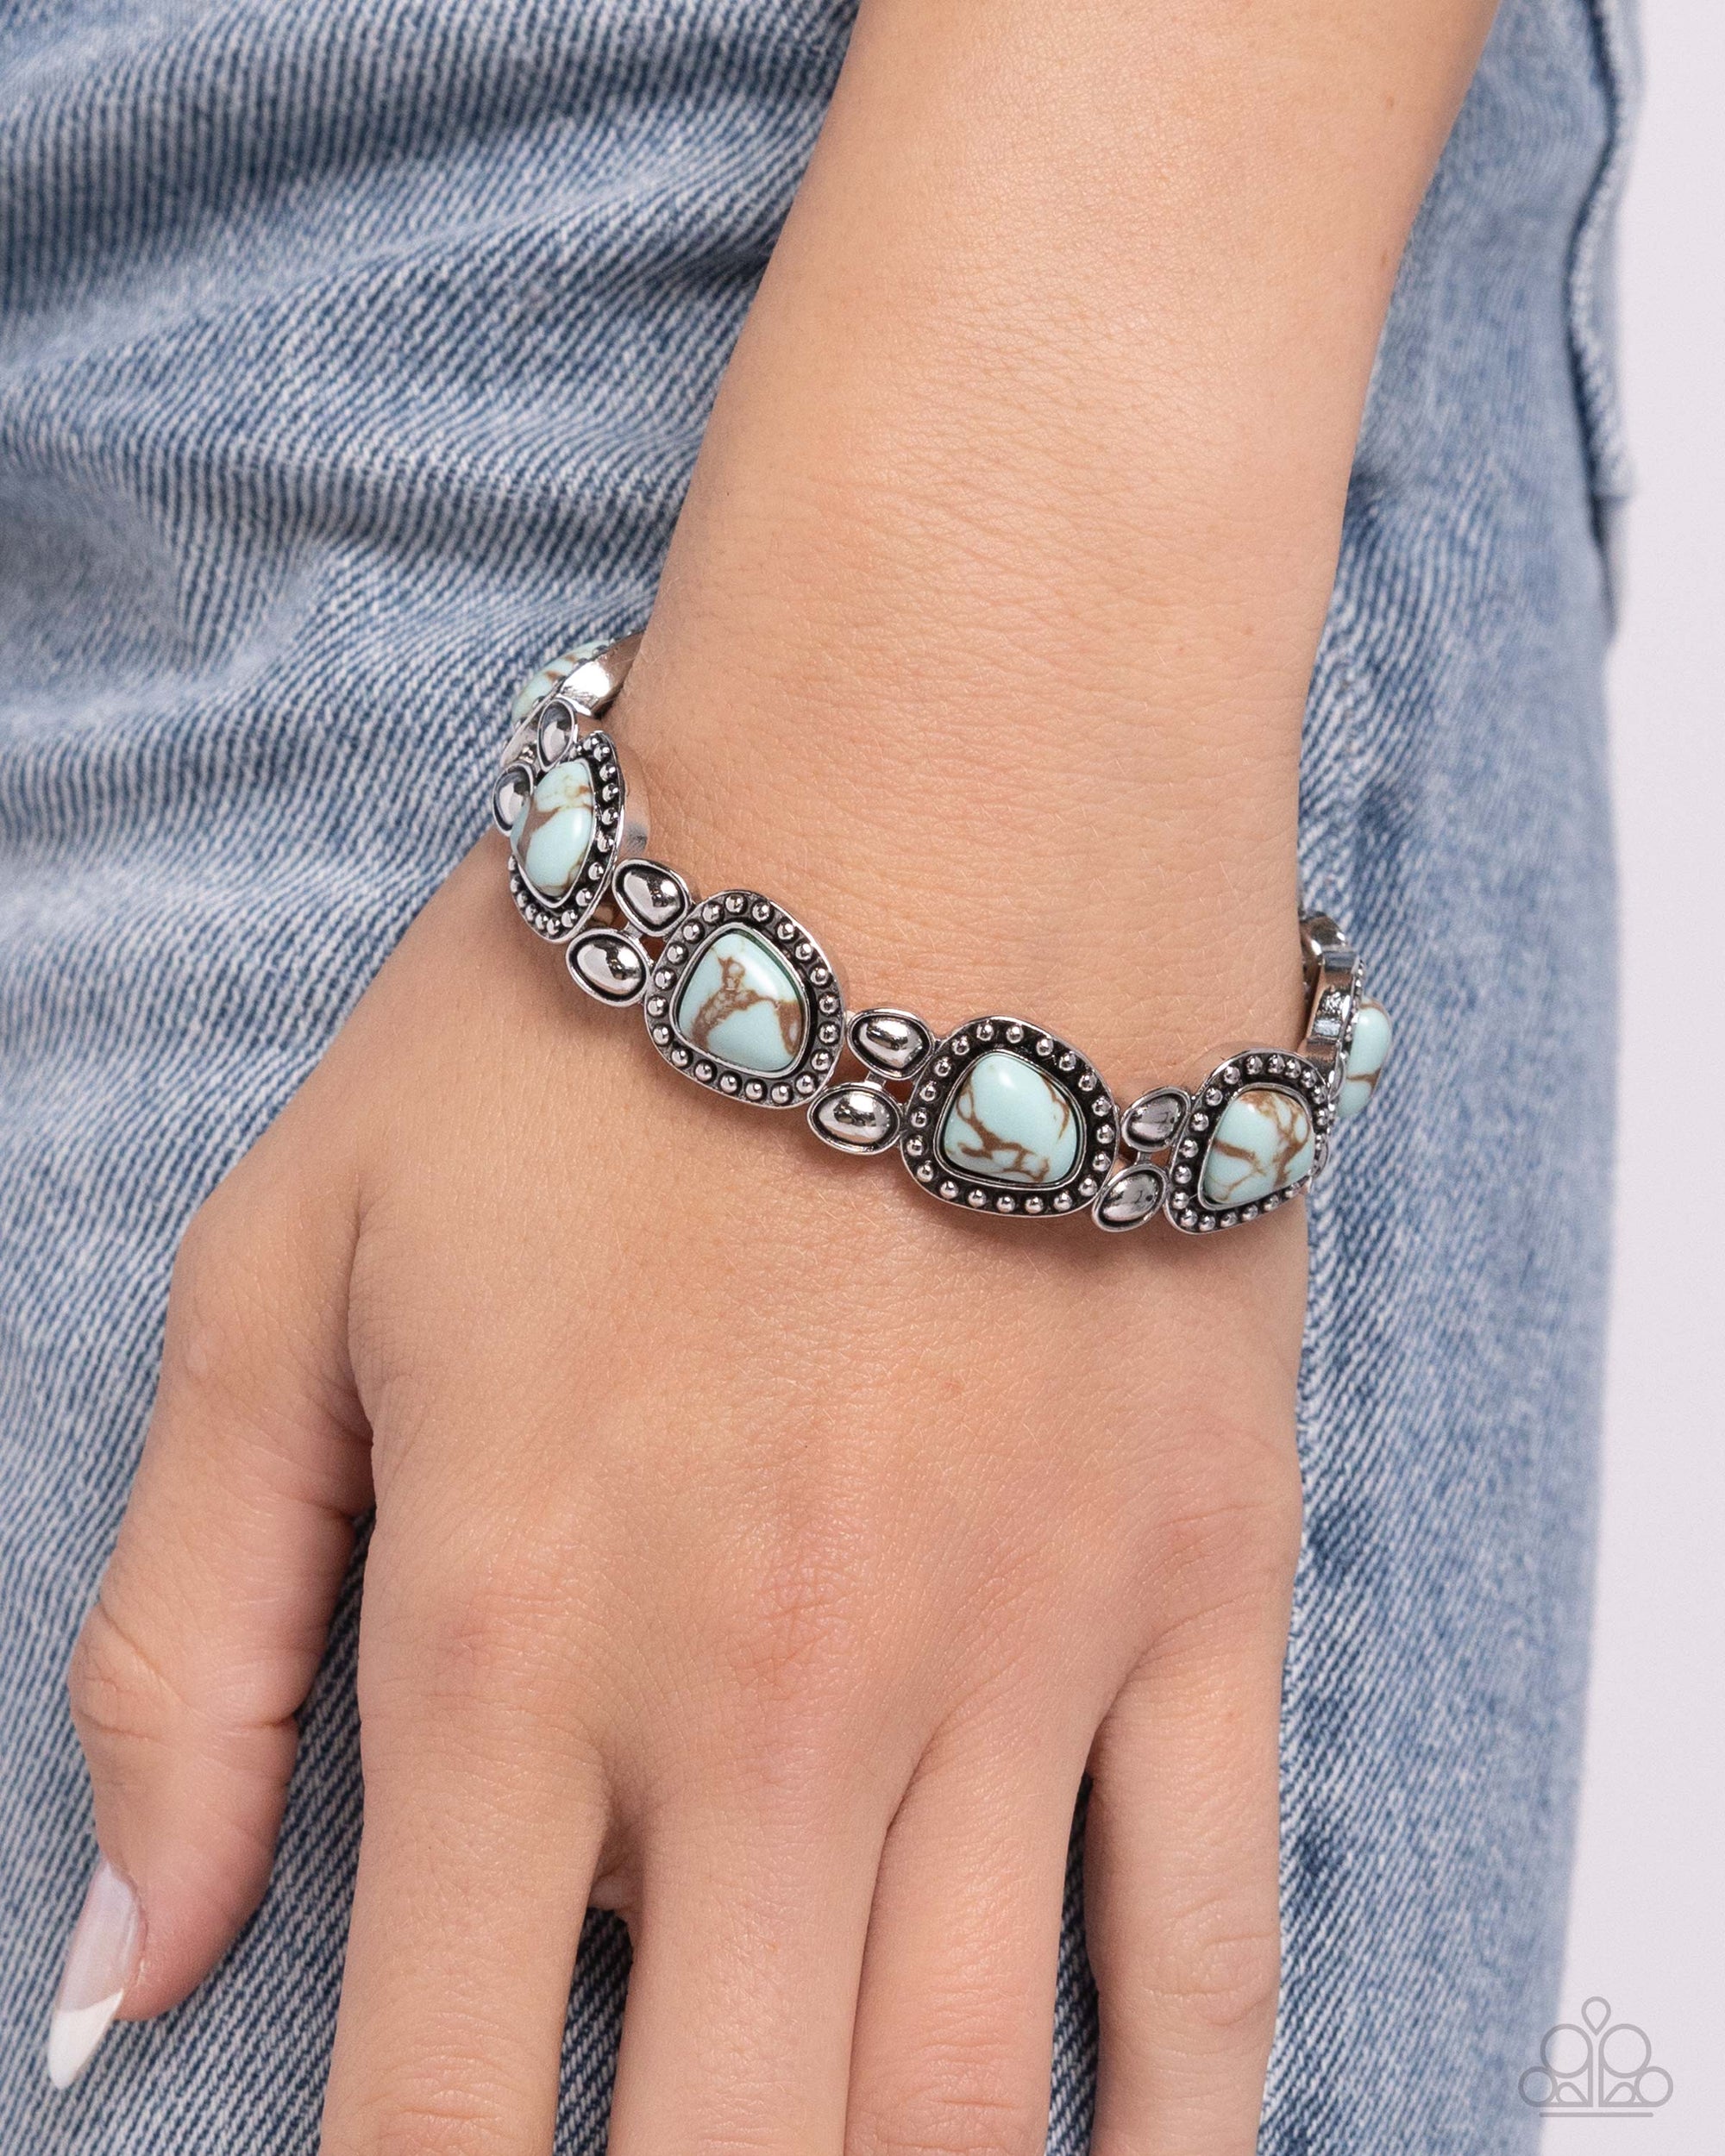 Harmonious Headliner Blue Stone Bracelet - Paparazzi Accessories- lightbox - CarasShop.com - $5 Jewelry by Cara Jewels